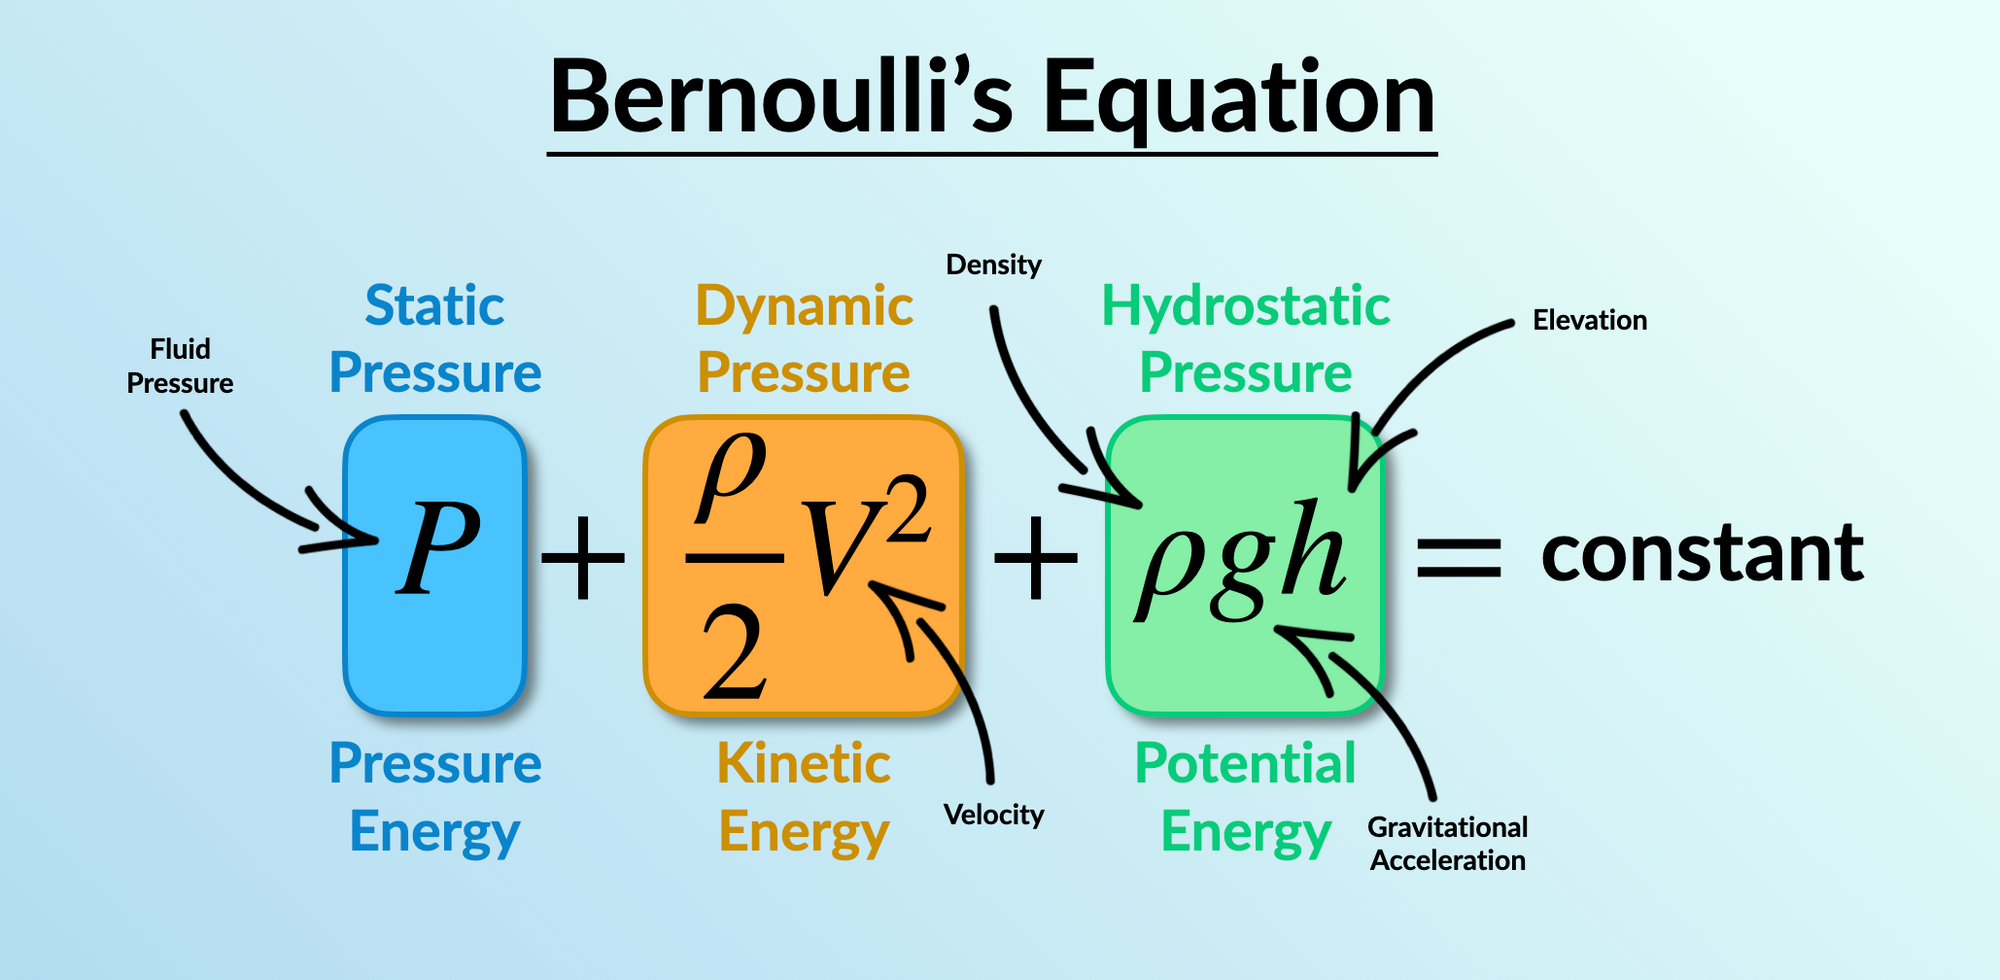 Bernoulli's Equation by Daniel Bernoulli (1738)